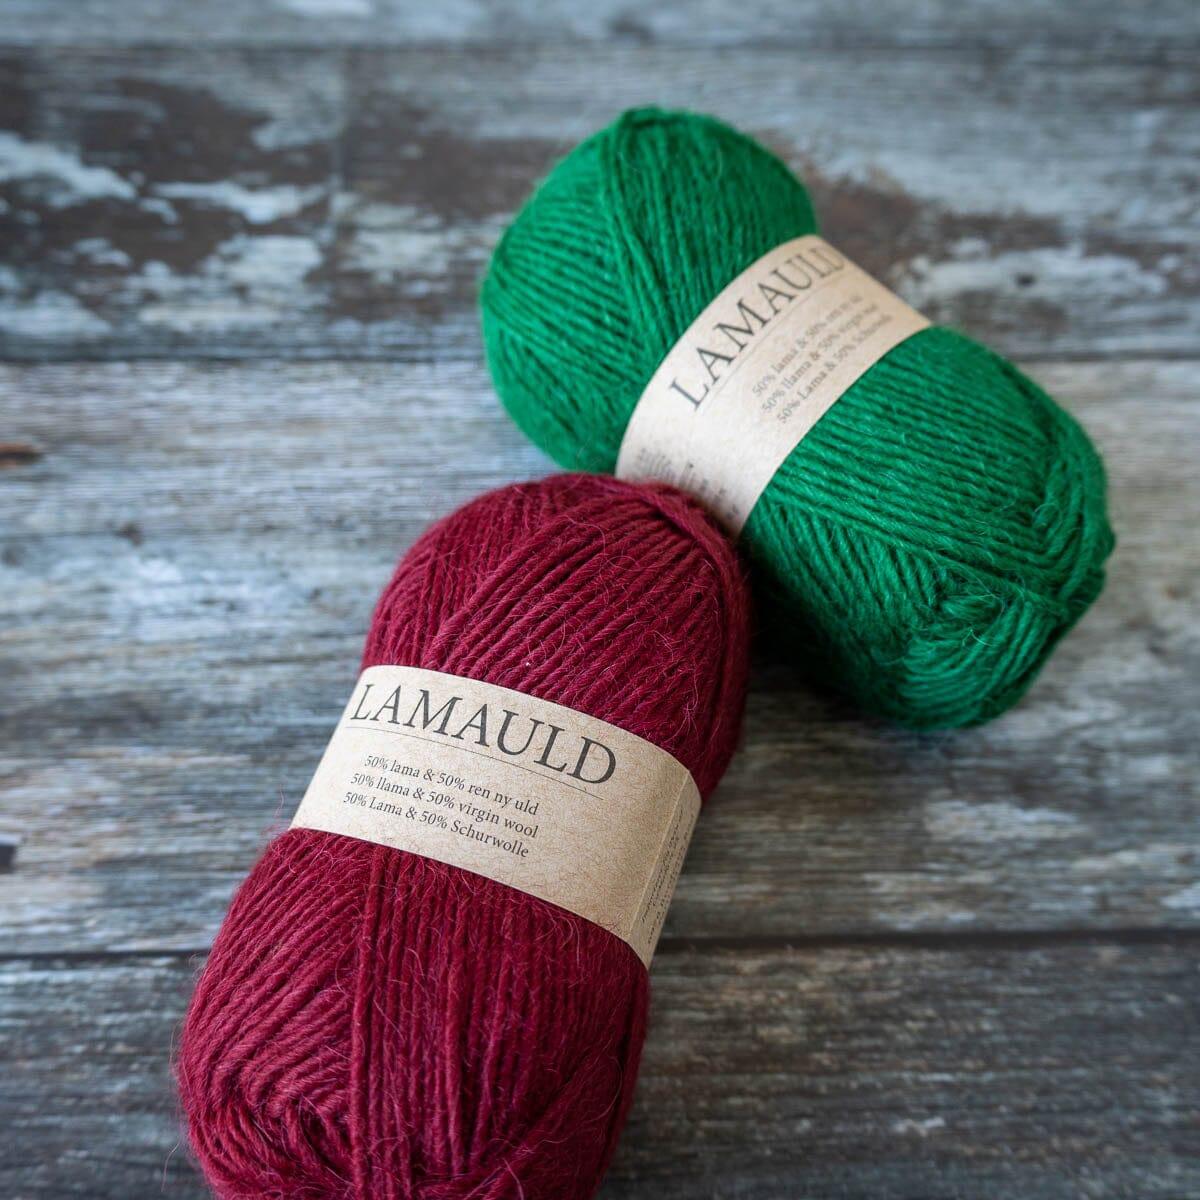 CaMaRose Camarose Lamauld -  - Aran Knitting Yarn